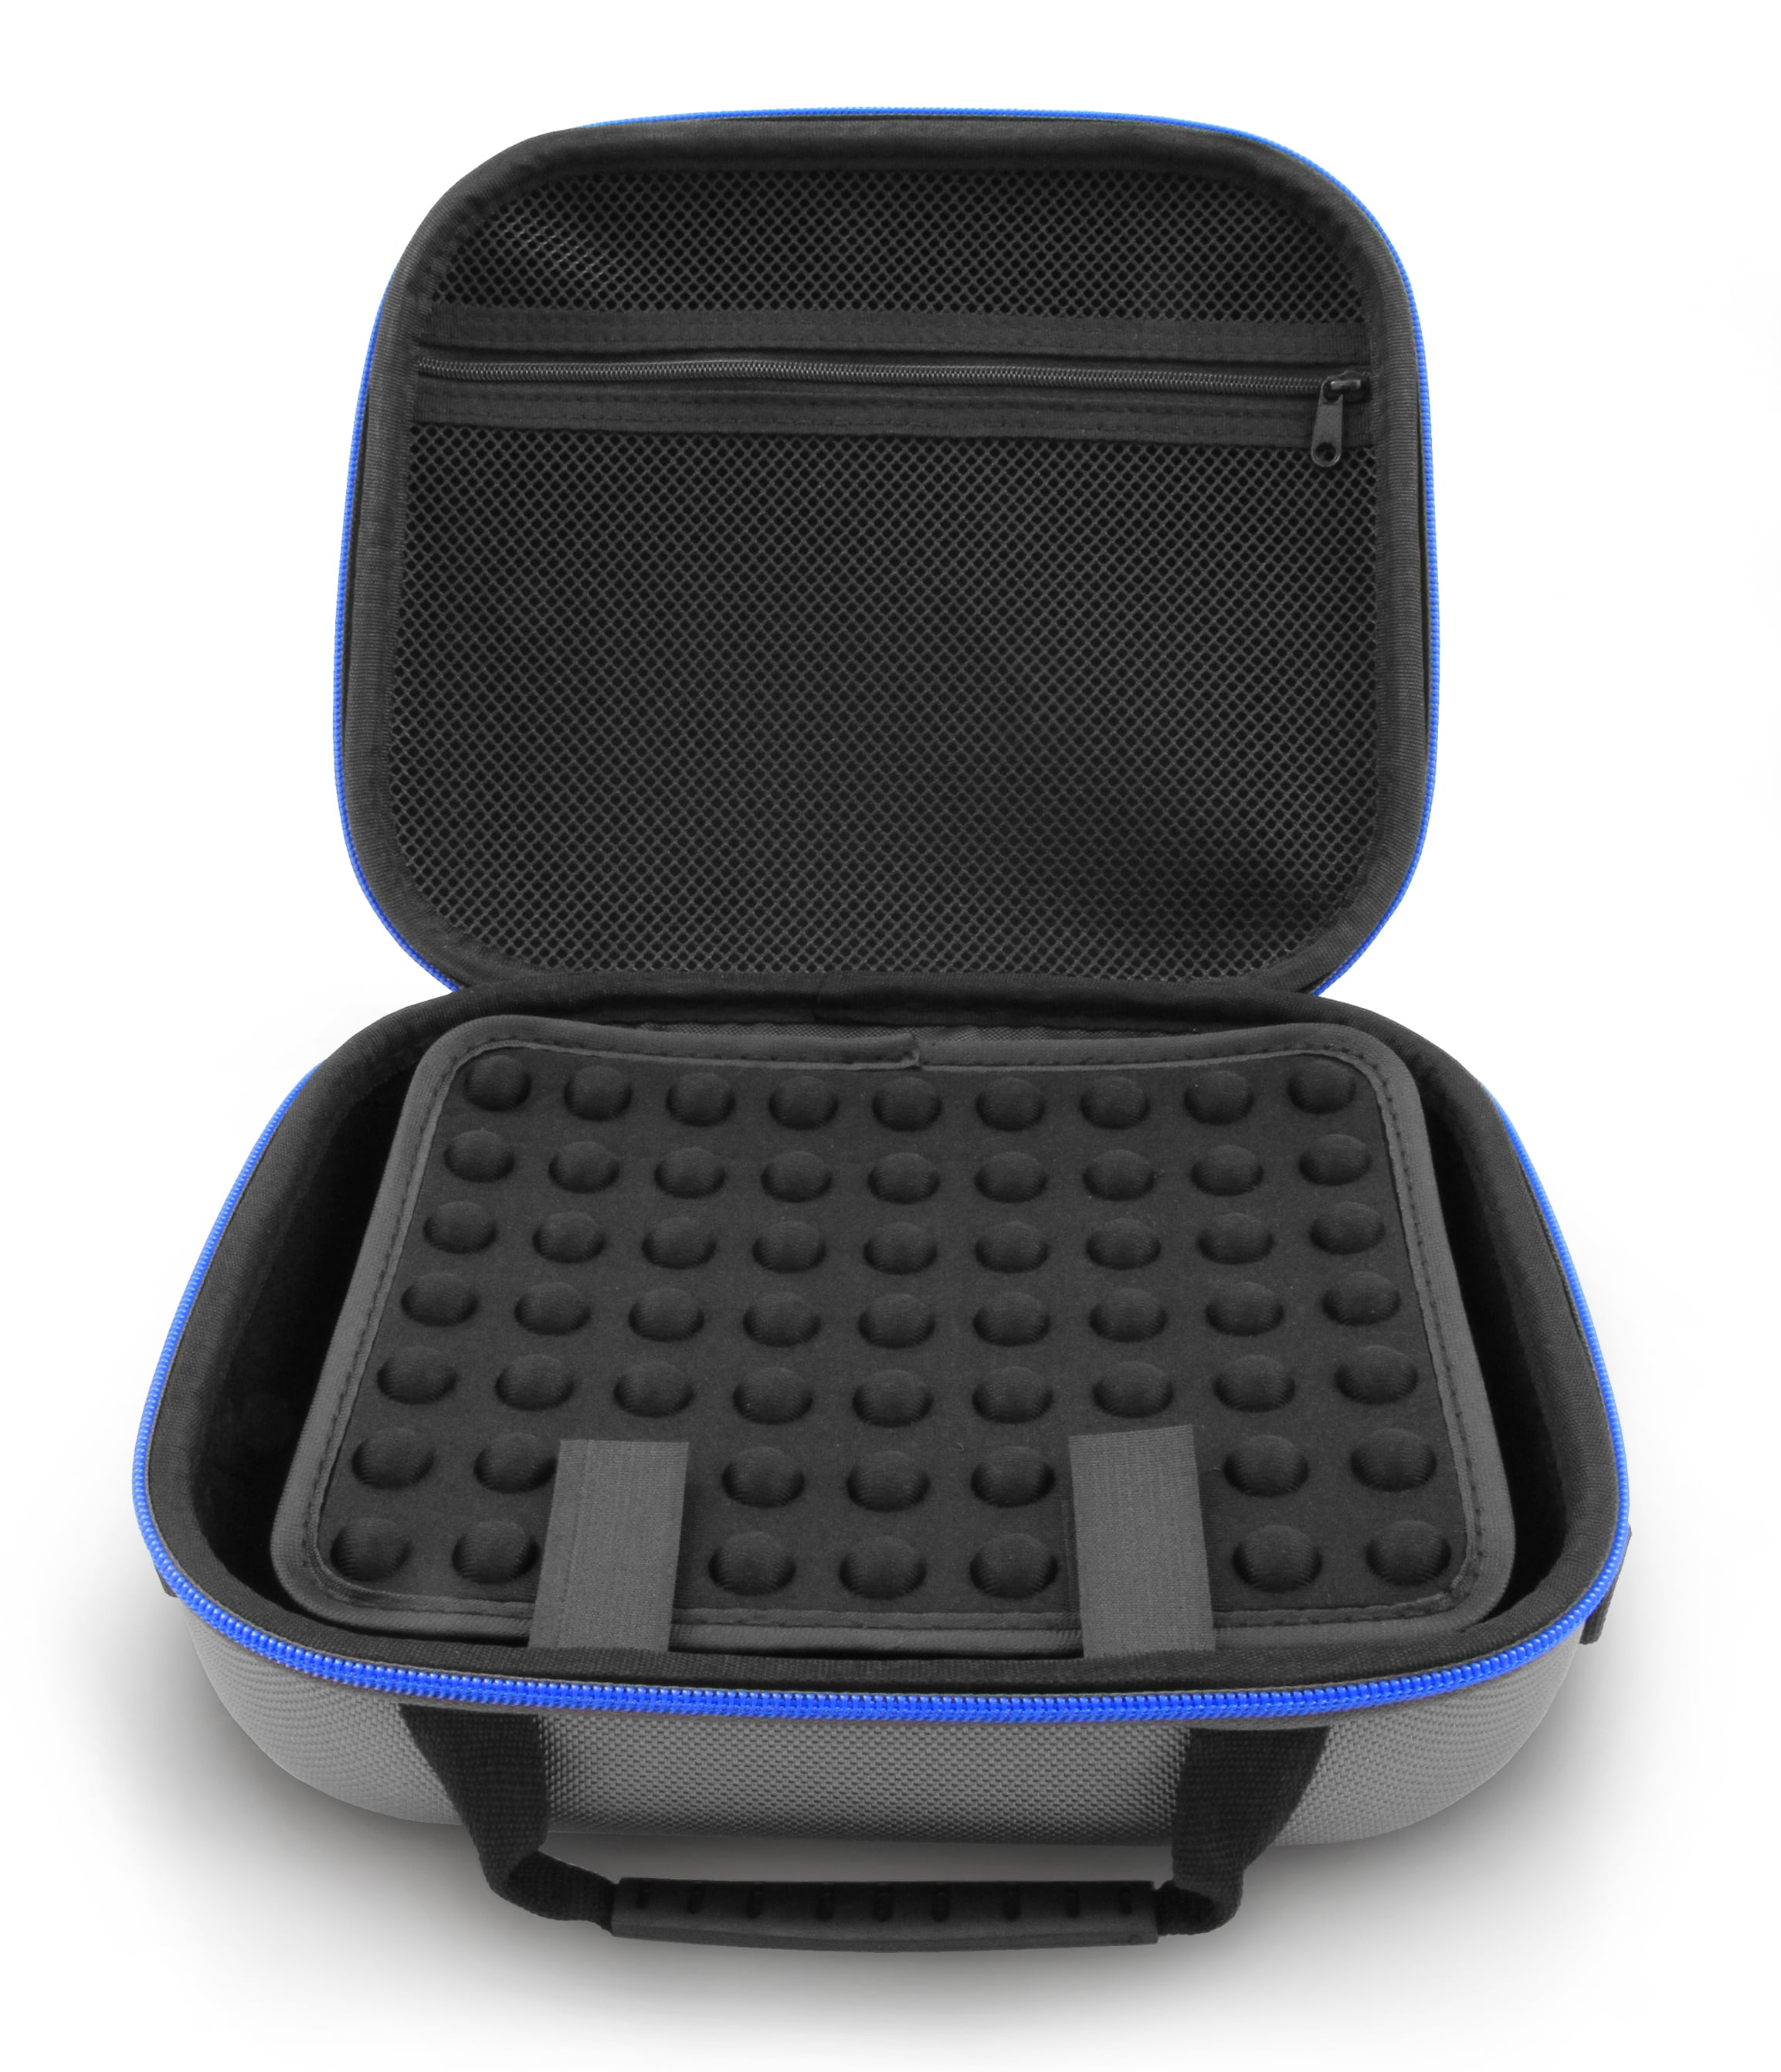 For Panasonic er-gp80 Clippers EVA Travel Bag Pouch Case Box